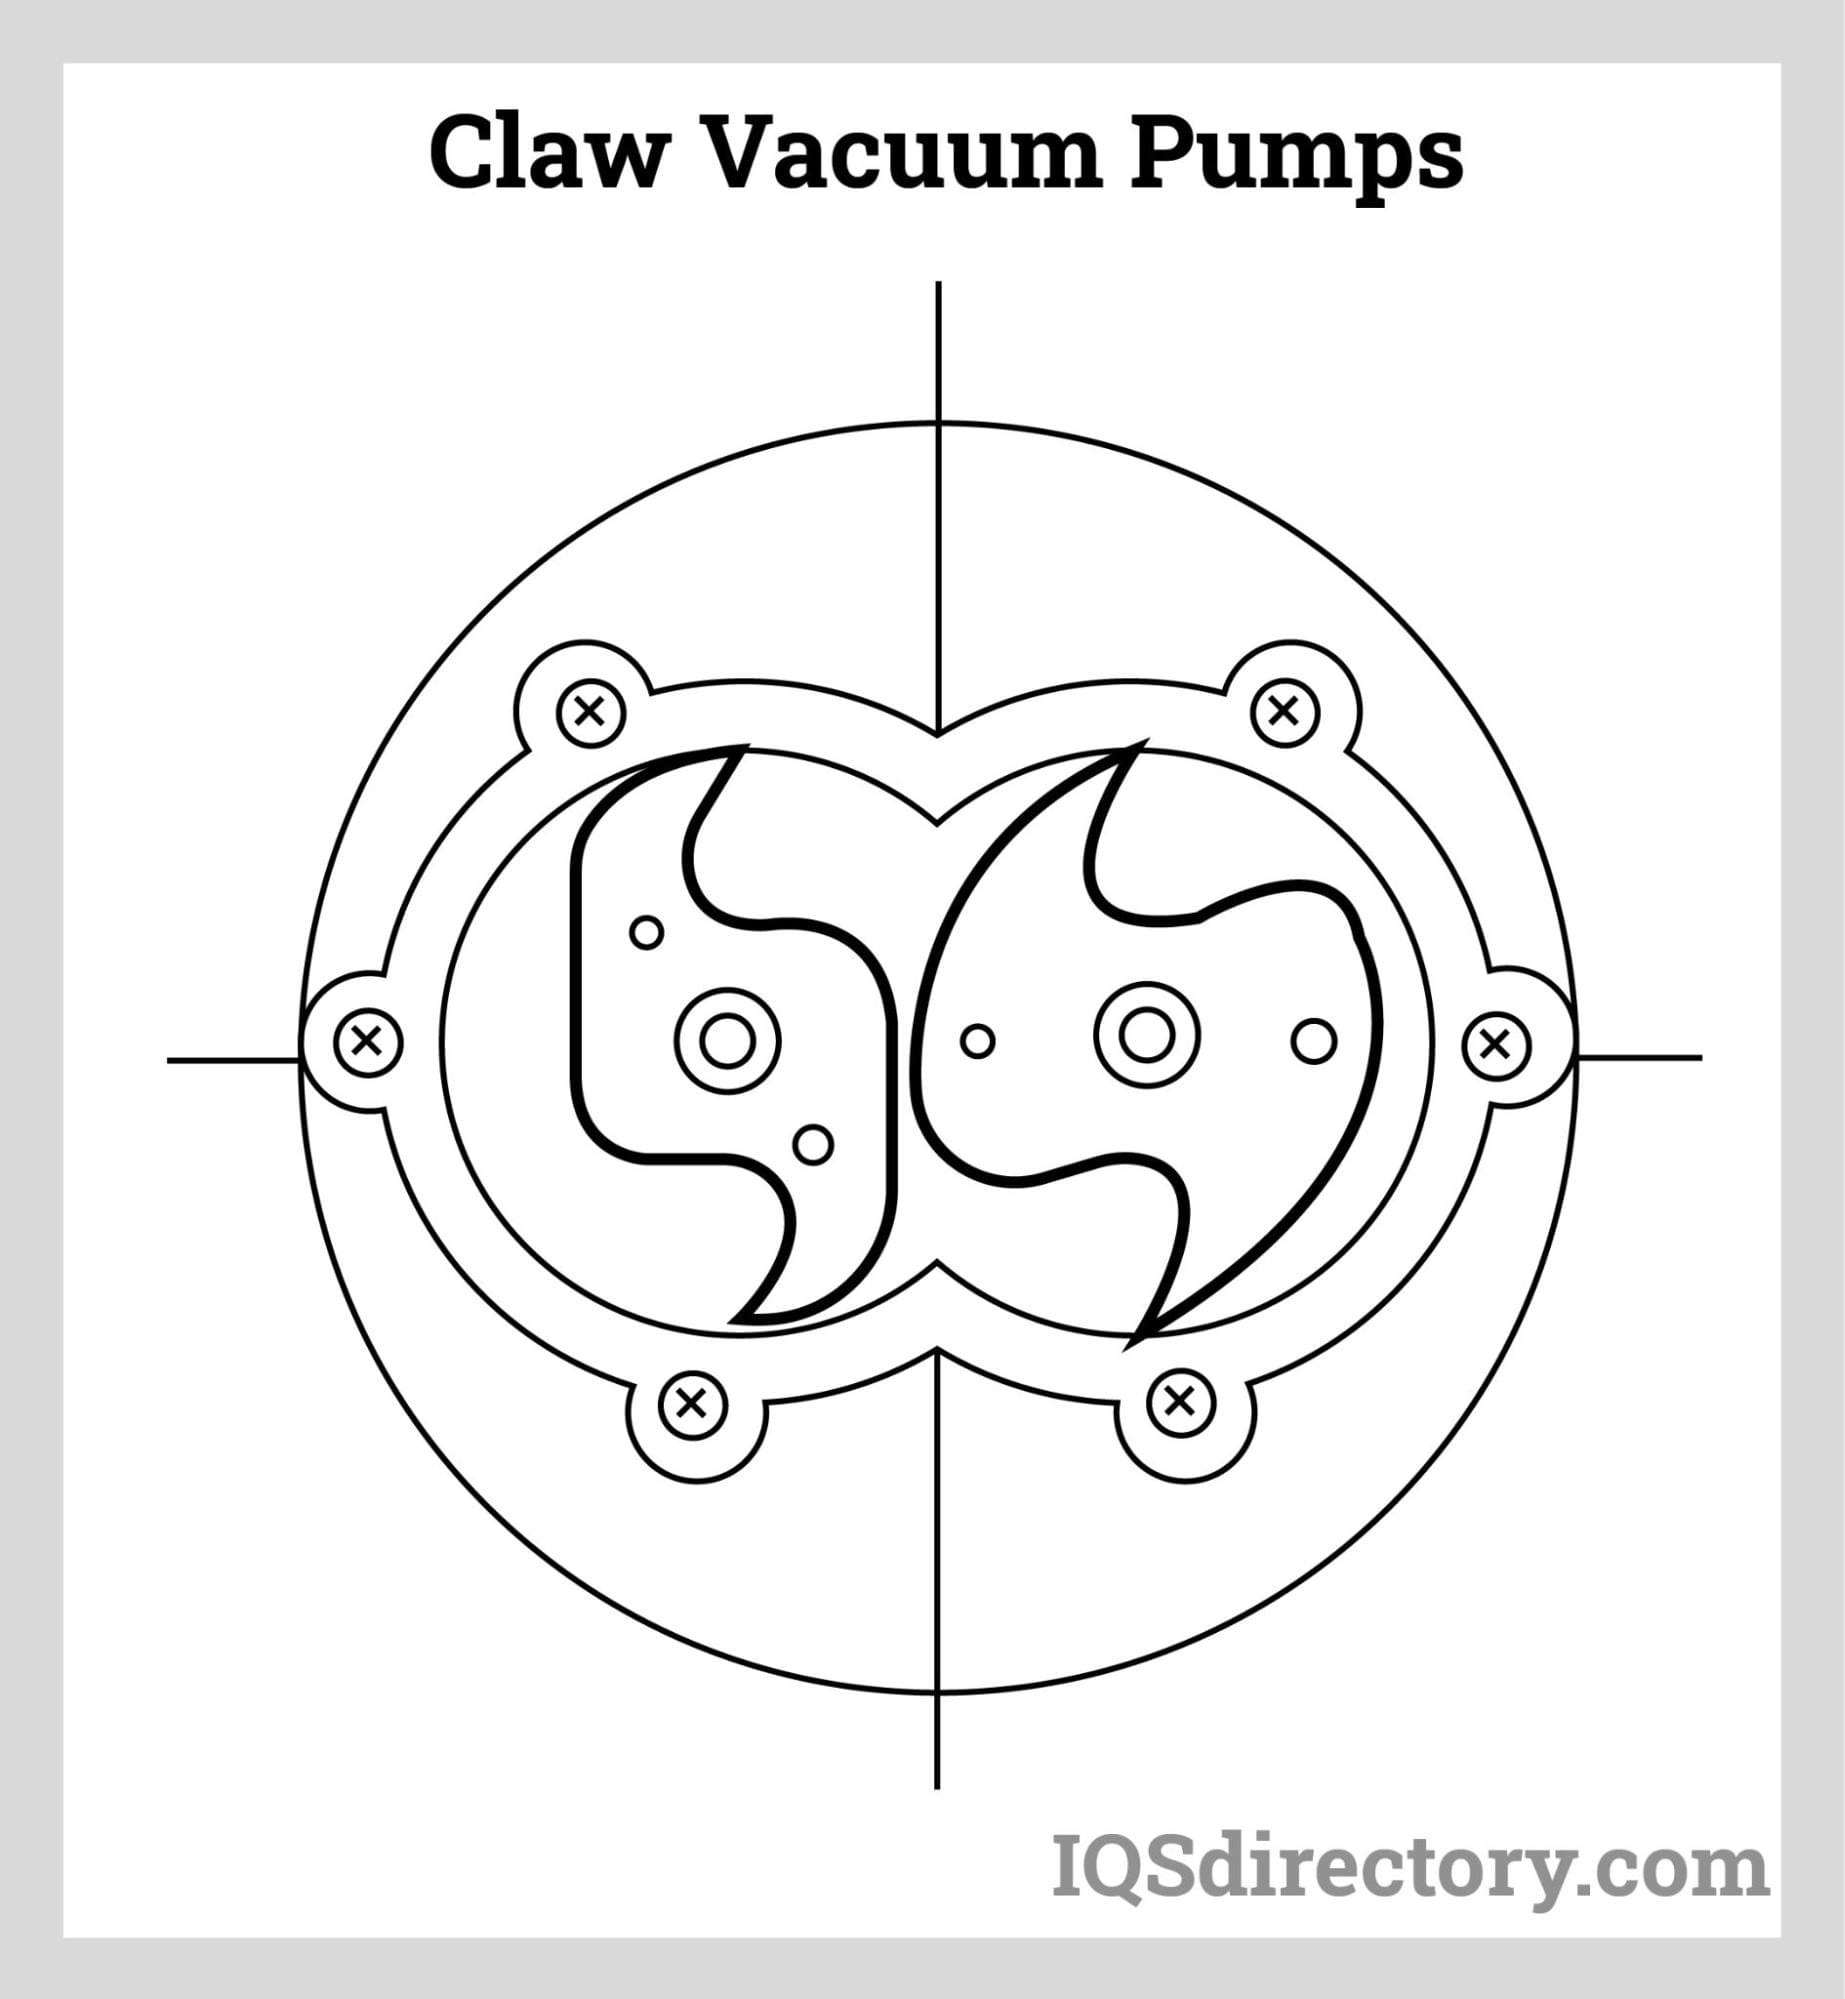 Claw Vacuum Pumps